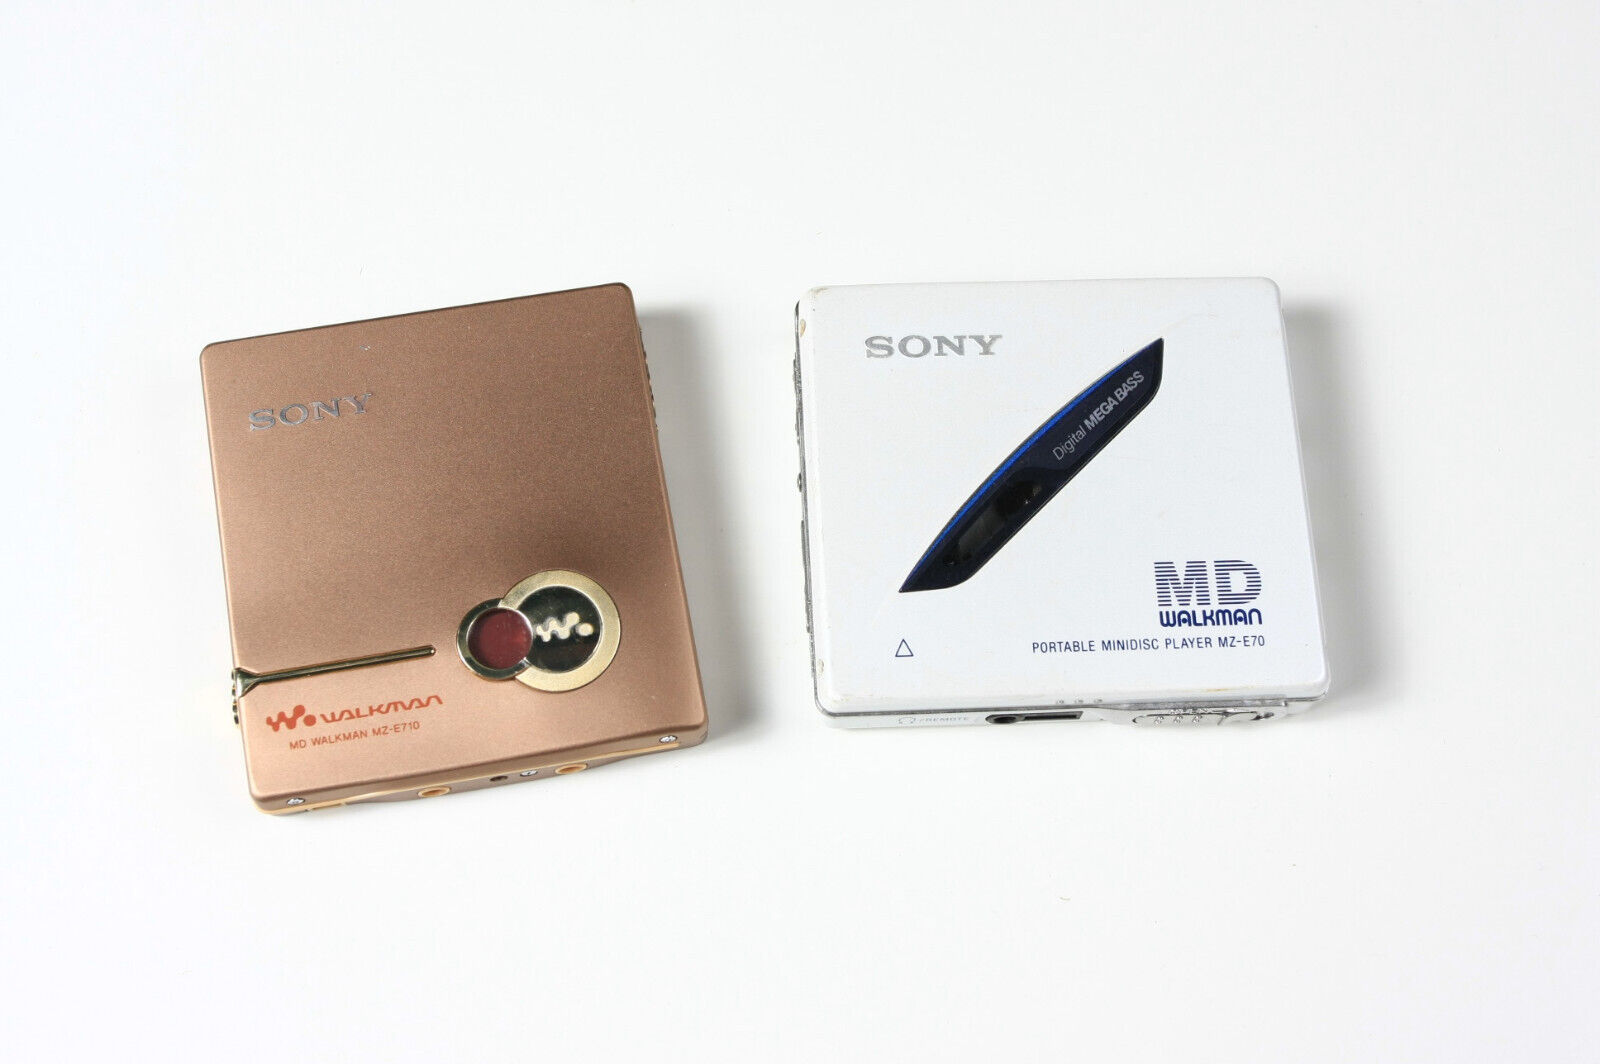 Sony Md Minidisc Player Mz-e70 E710